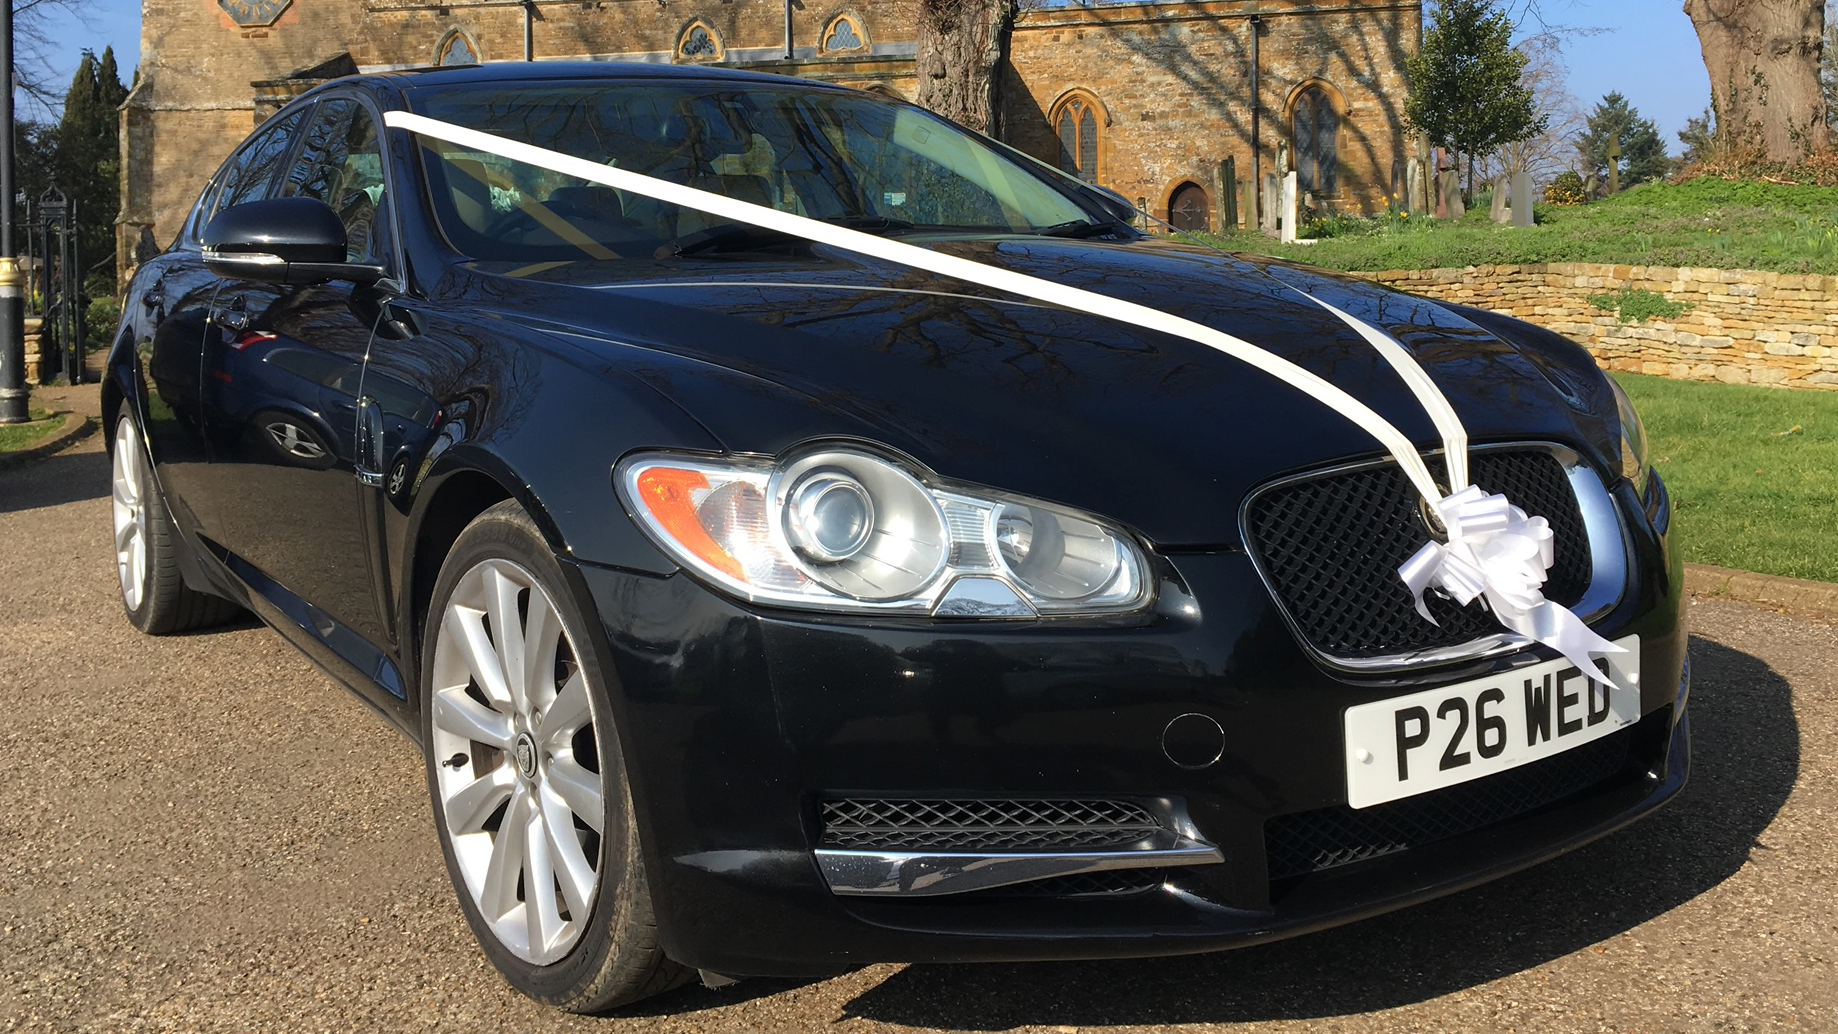 Jaguar XF wedding car for hire in Leeds, West Yorkshire